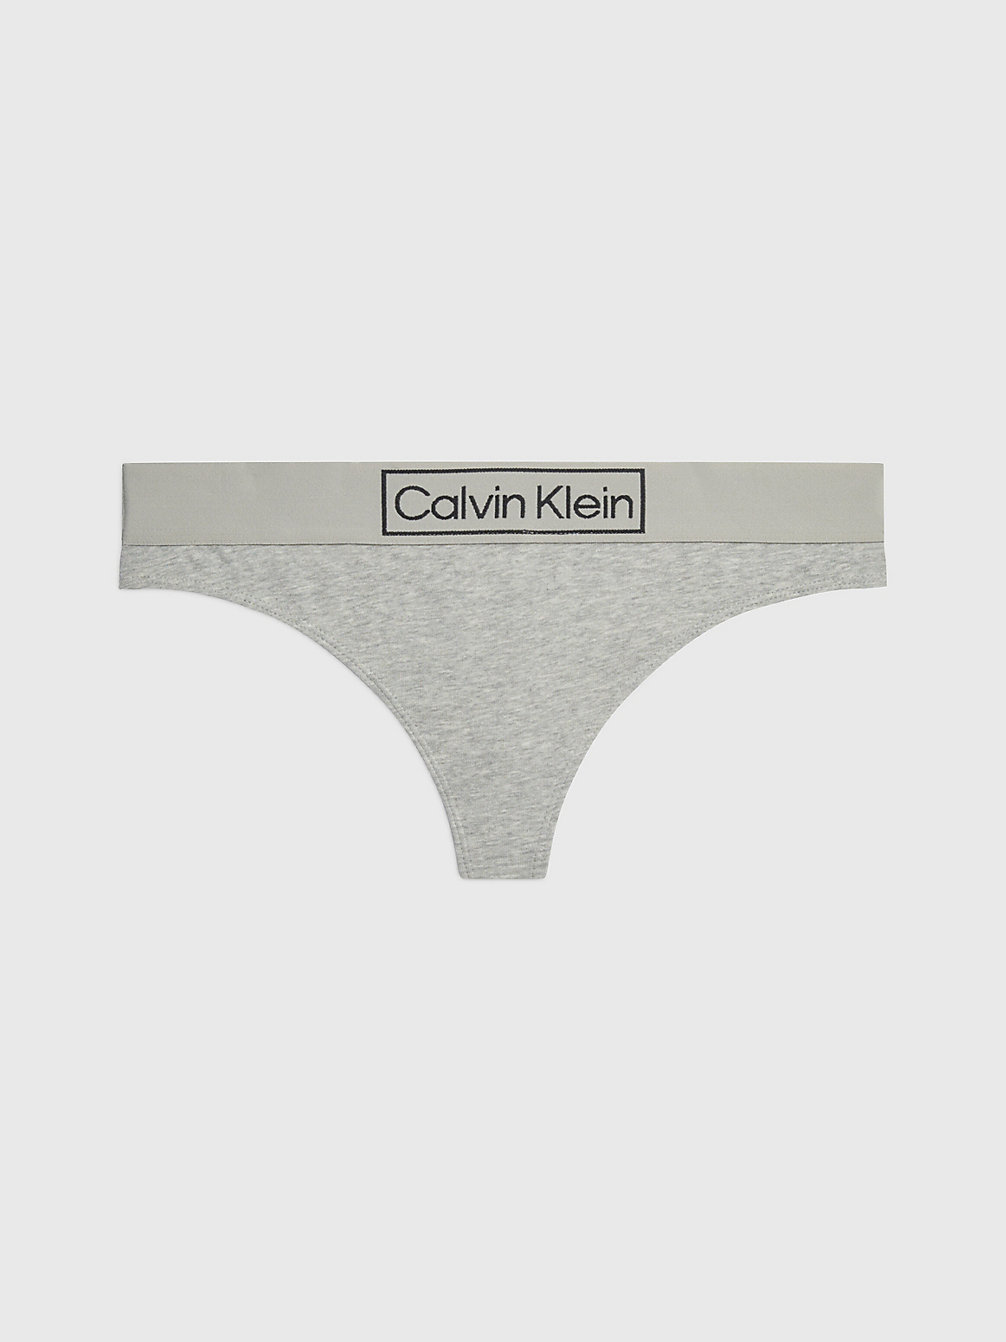 GREY HEATHER Thong - Reimagined Heritage undefined women Calvin Klein